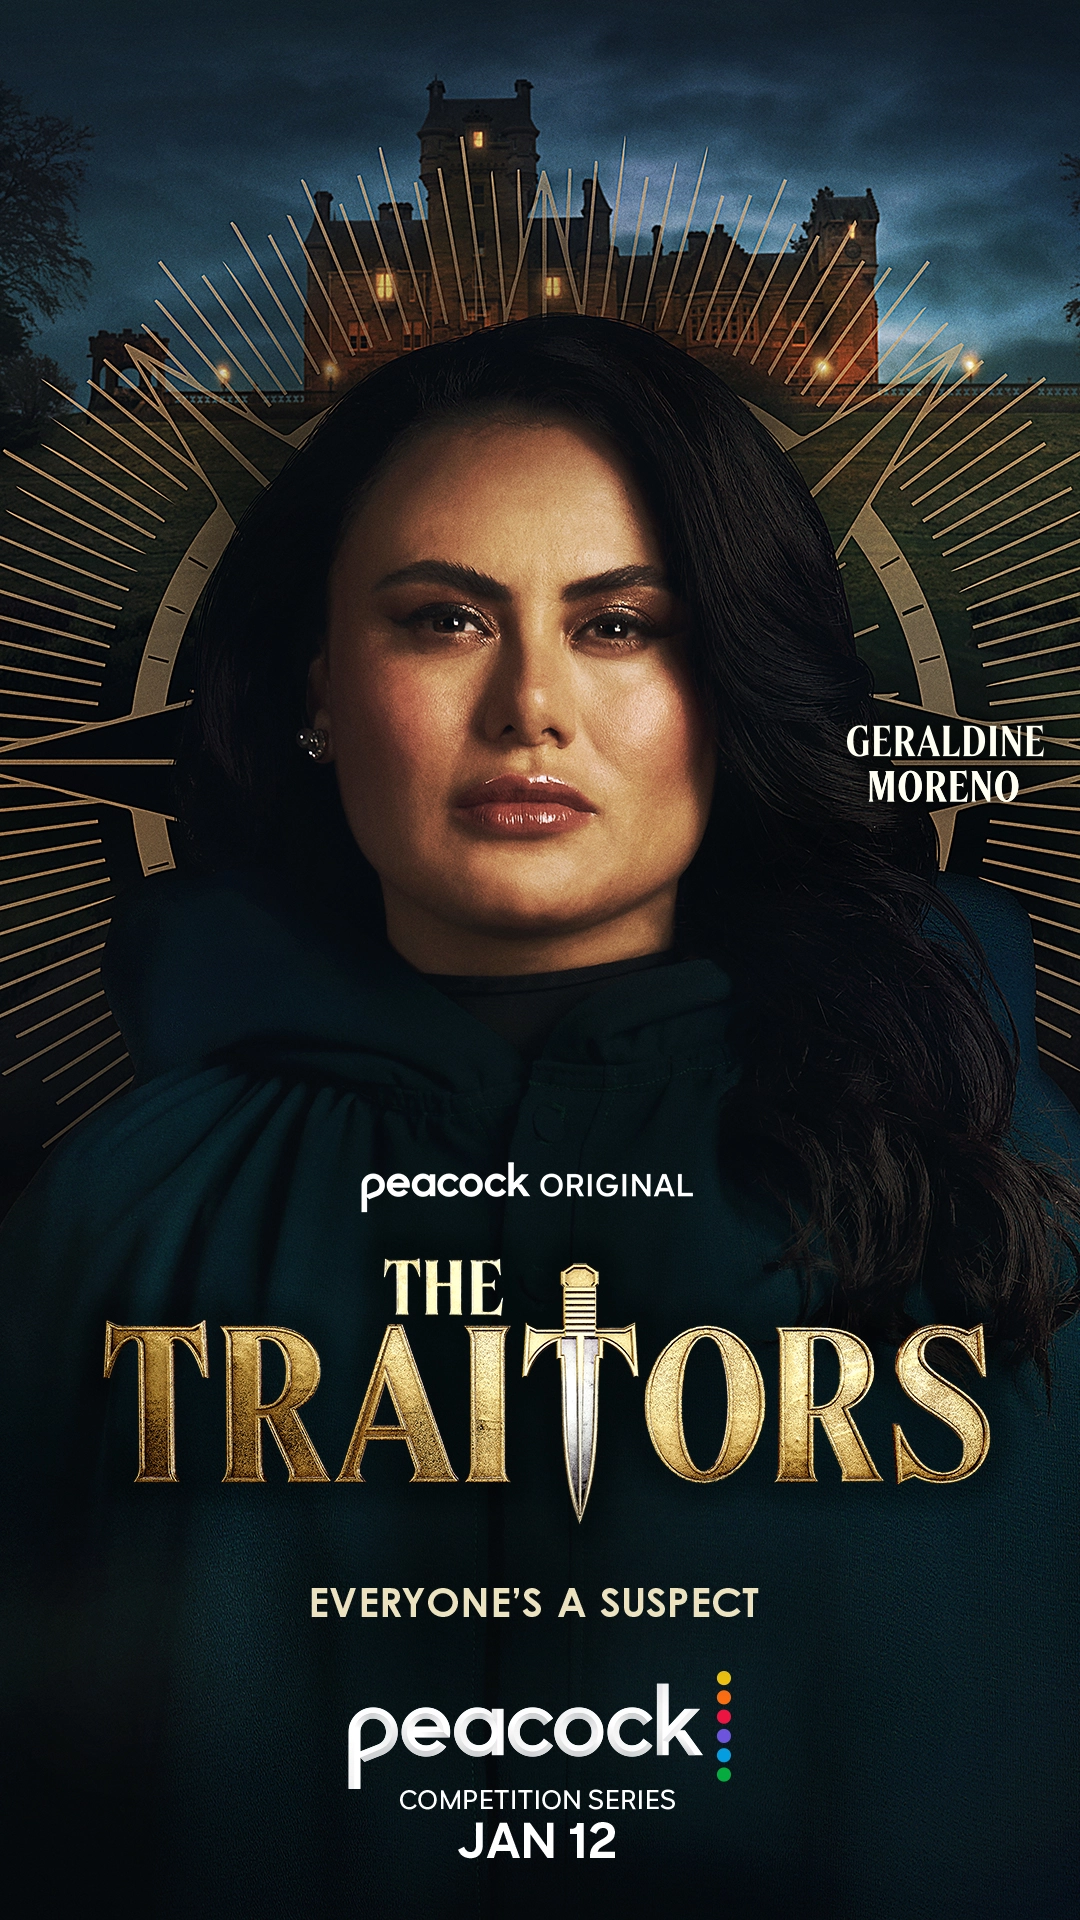 The Traitors (American season 1) - Wikipedia